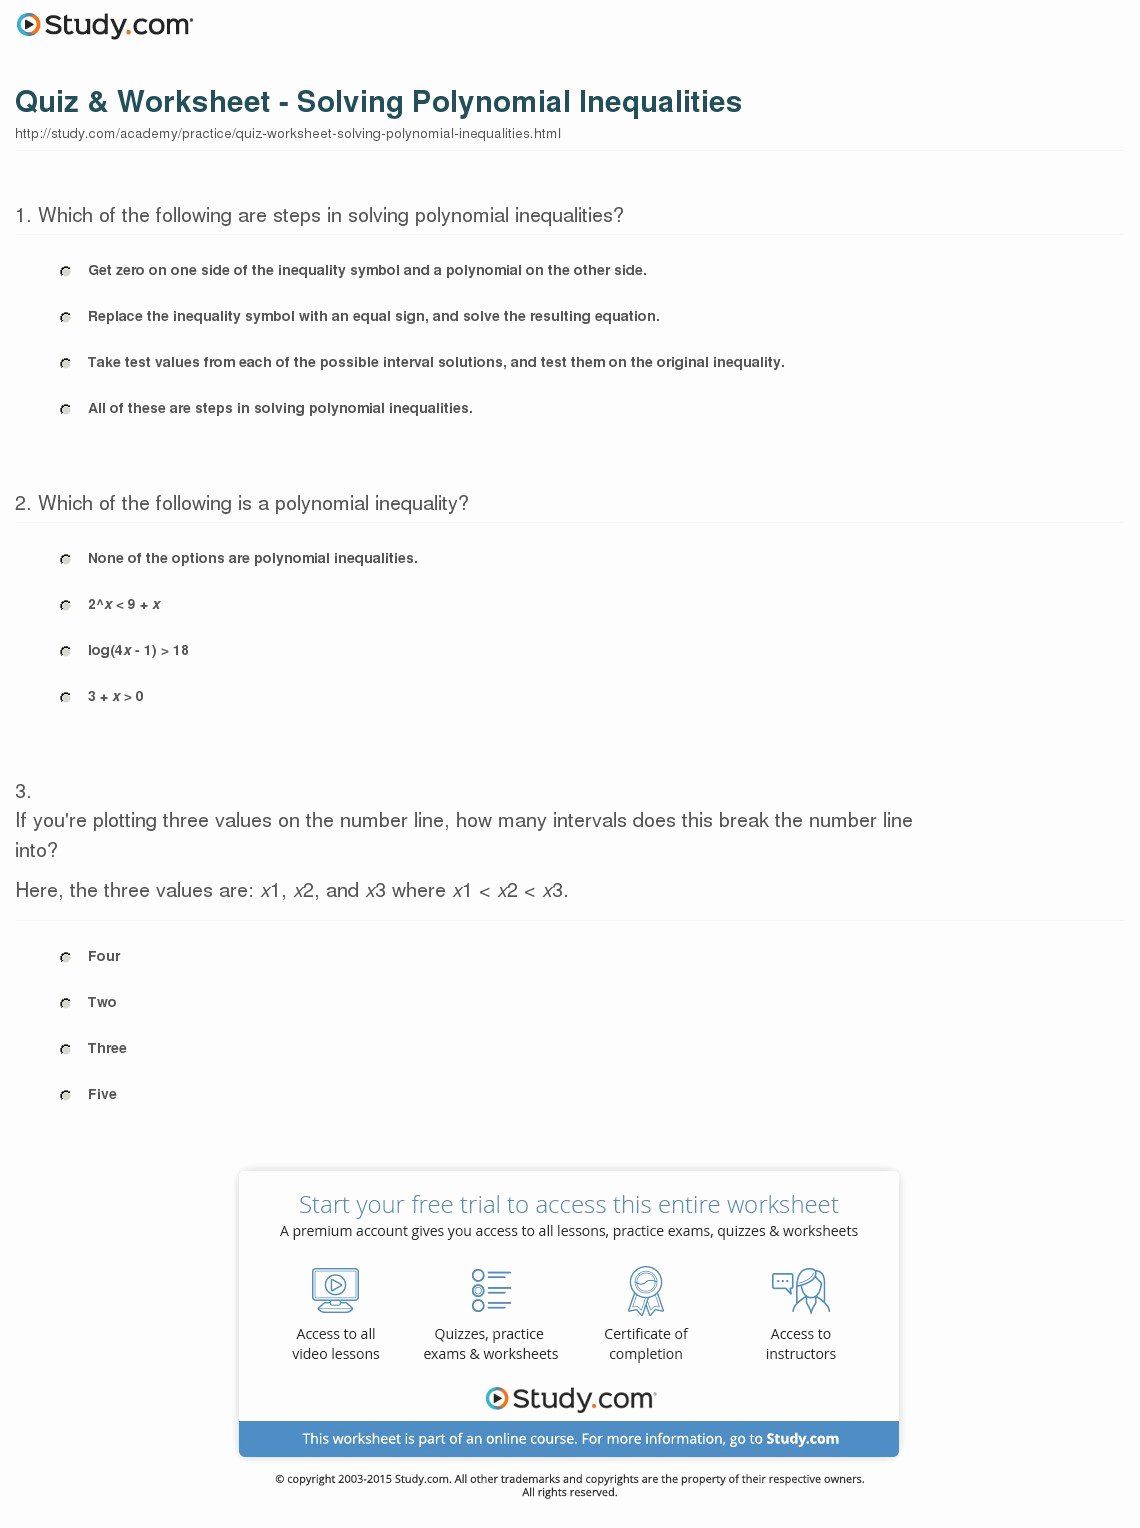 Solving Inequalities Worksheet Pdf Awesome Quiz &amp; Worksheet solving Polynomial Inequalities